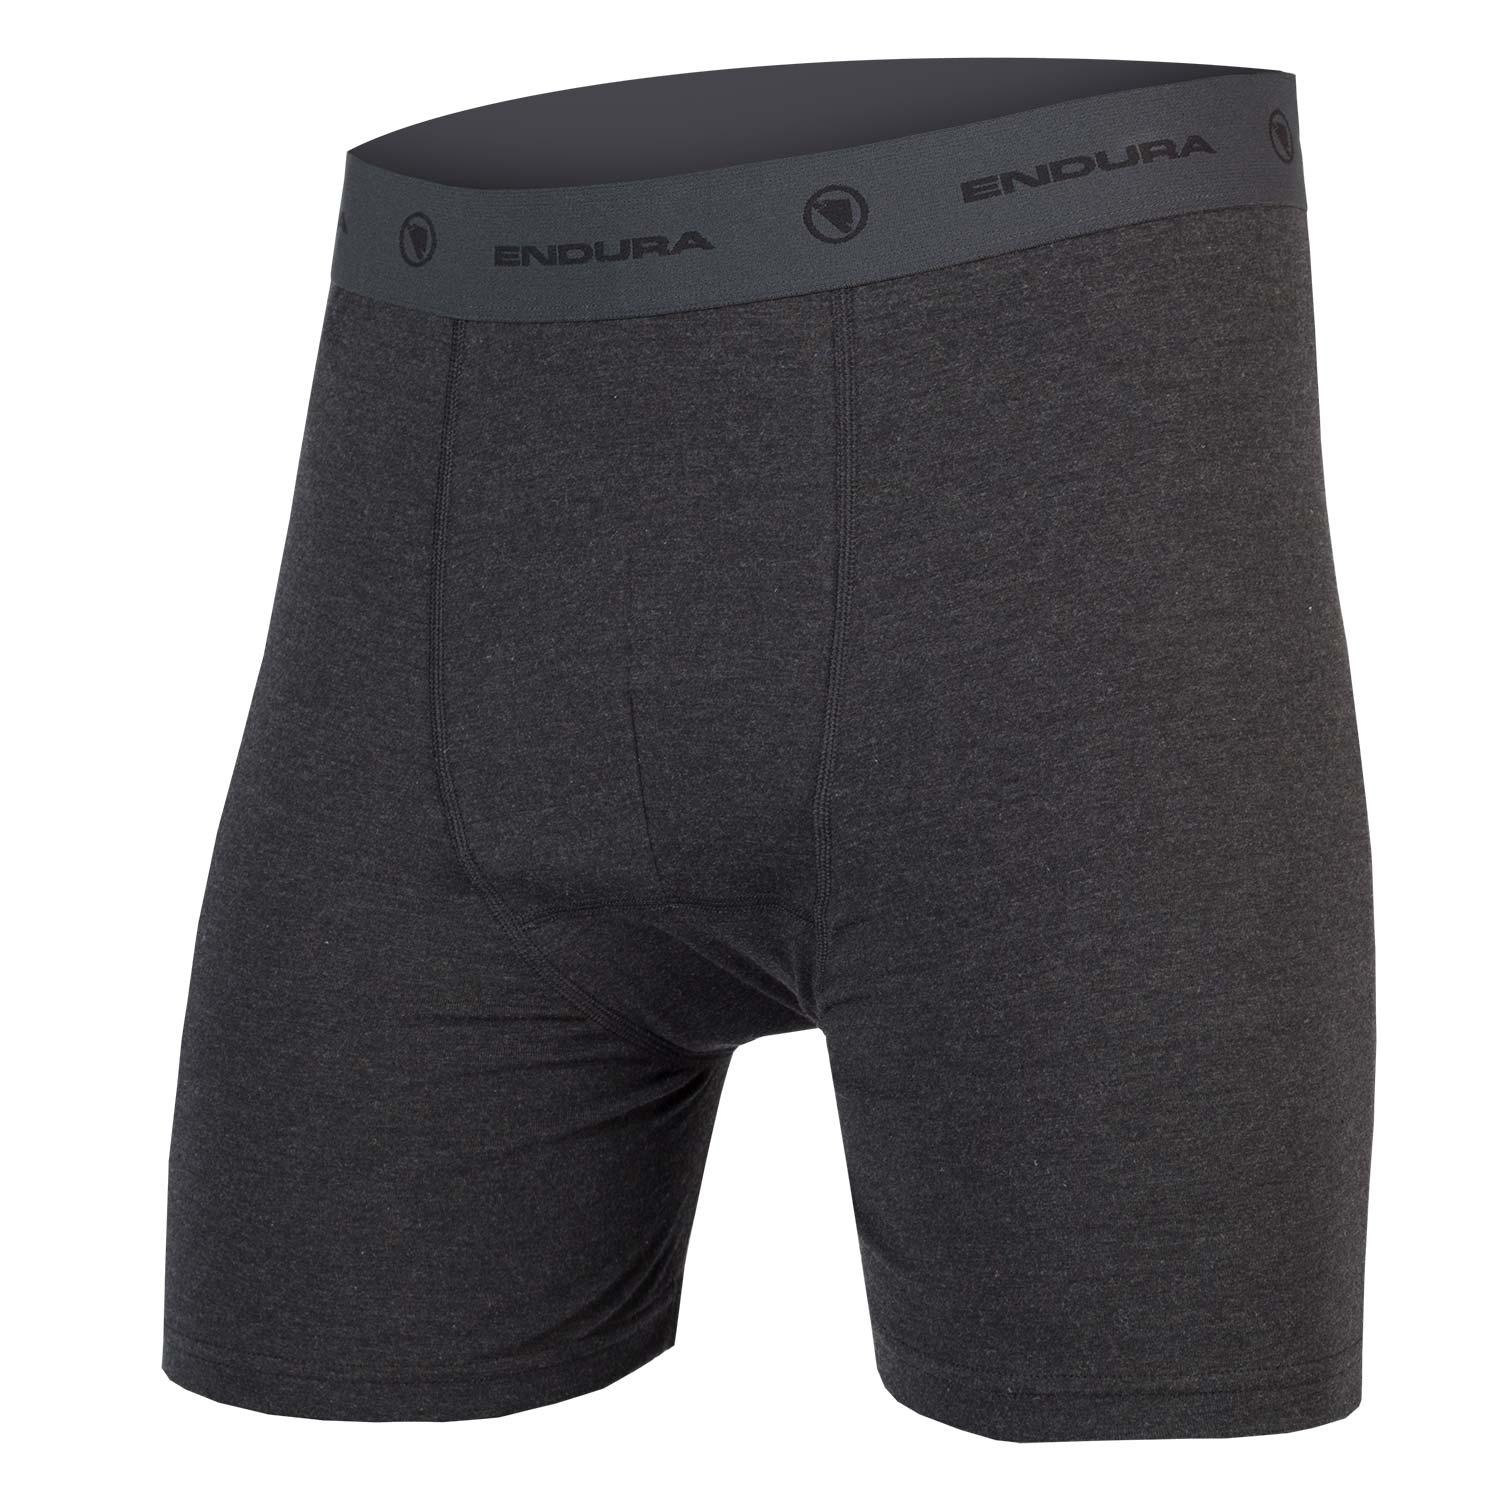 Endura Bike Boxer Shorts (twin Pack) - Black